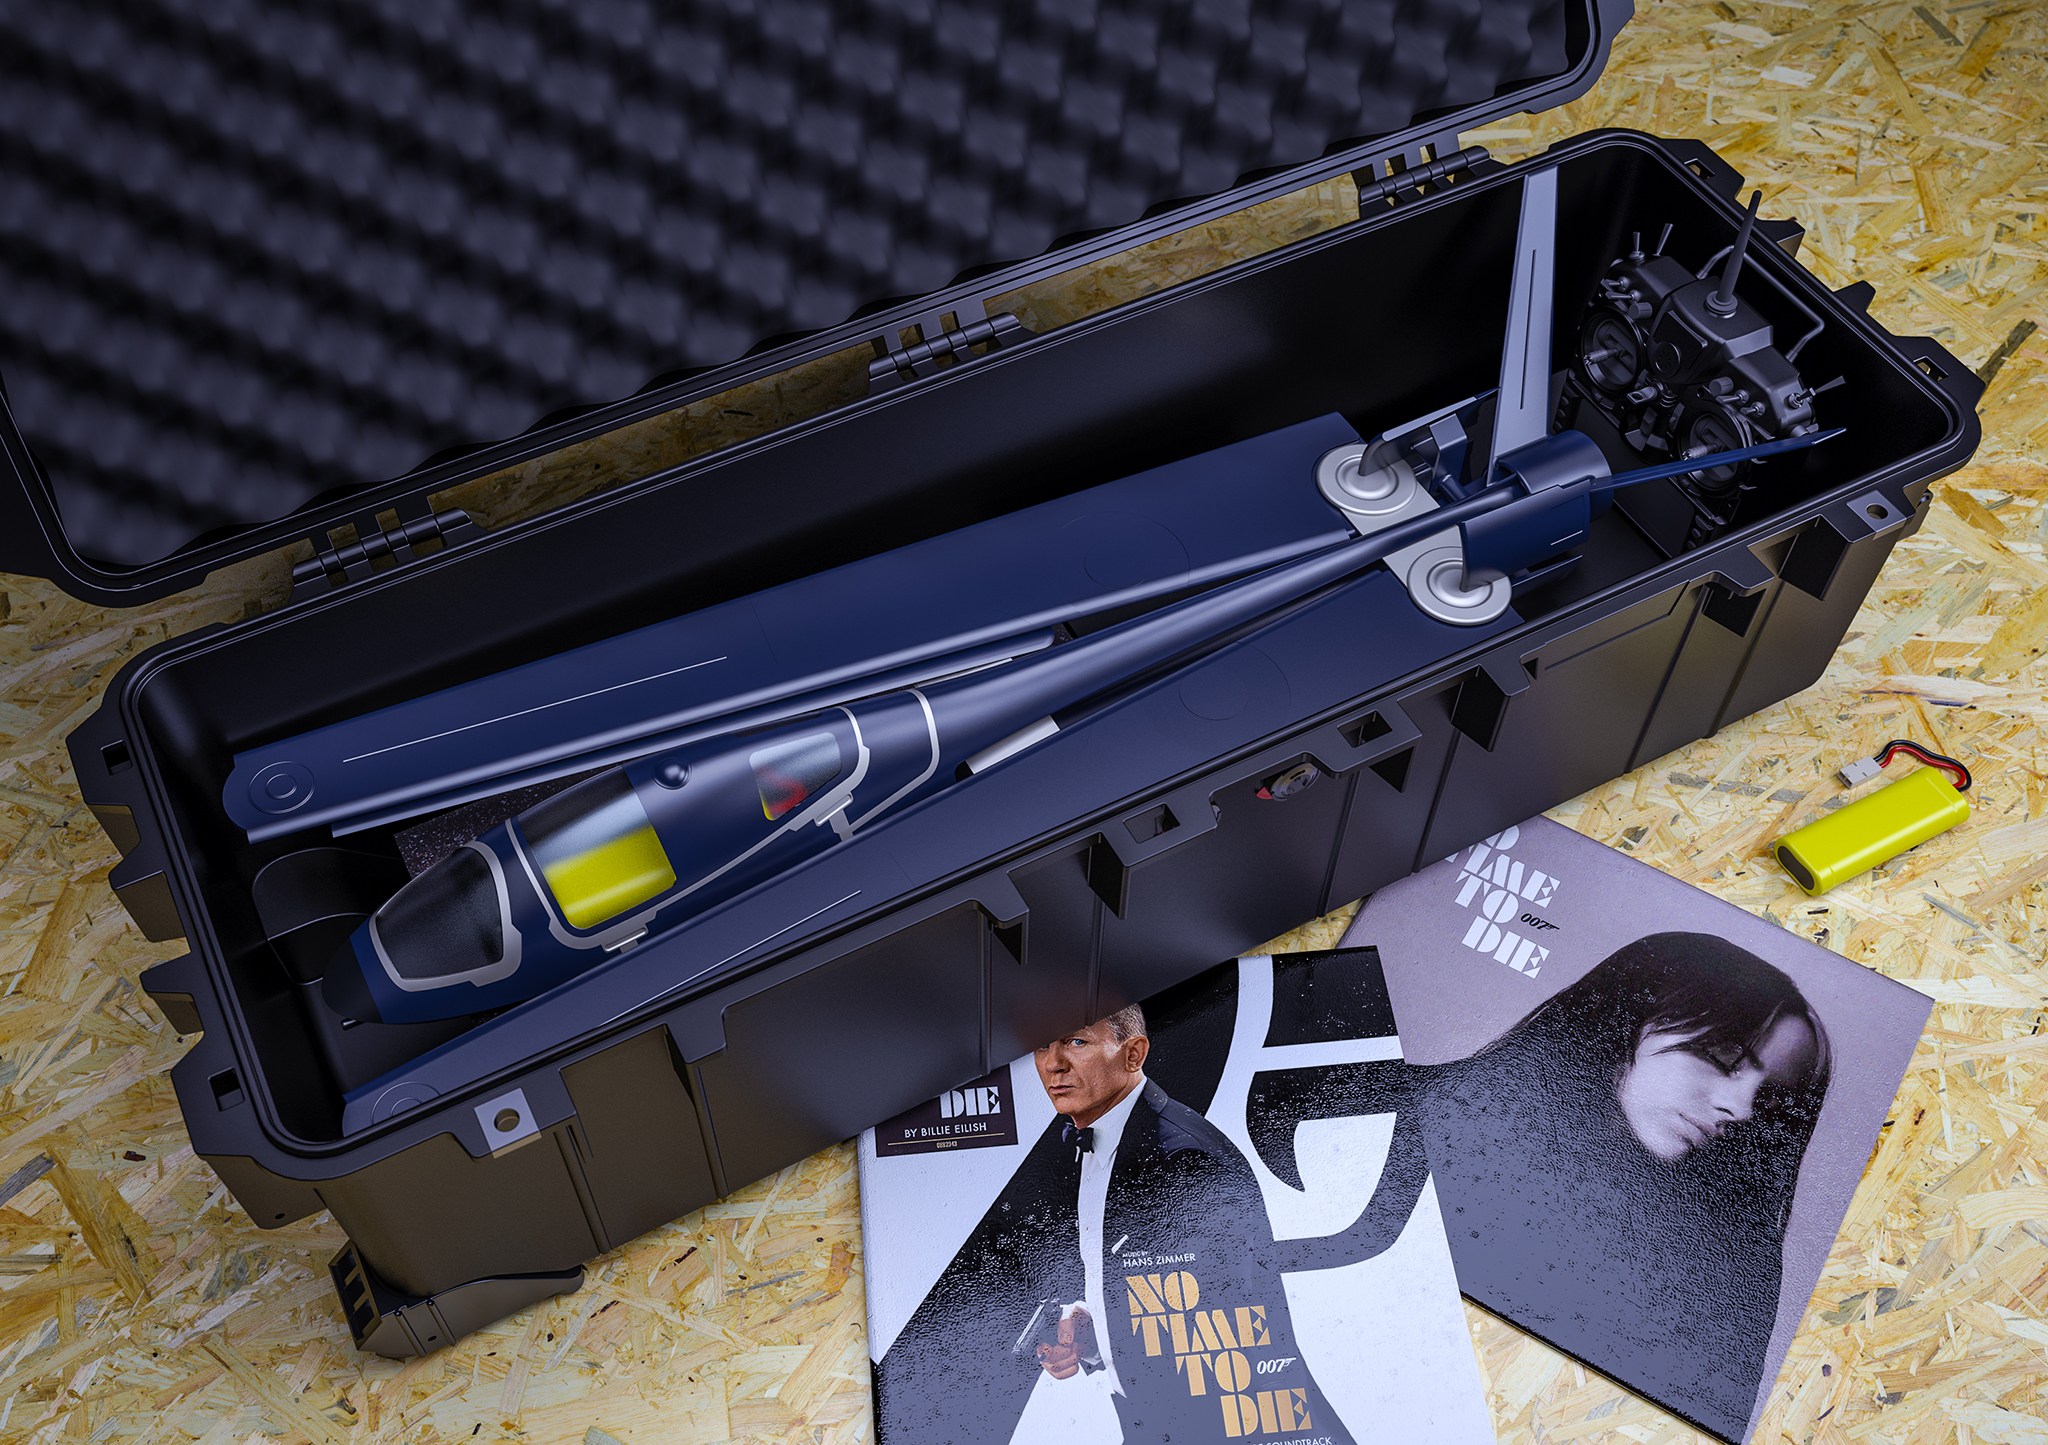 007 remote control Folding glider found in no time to die